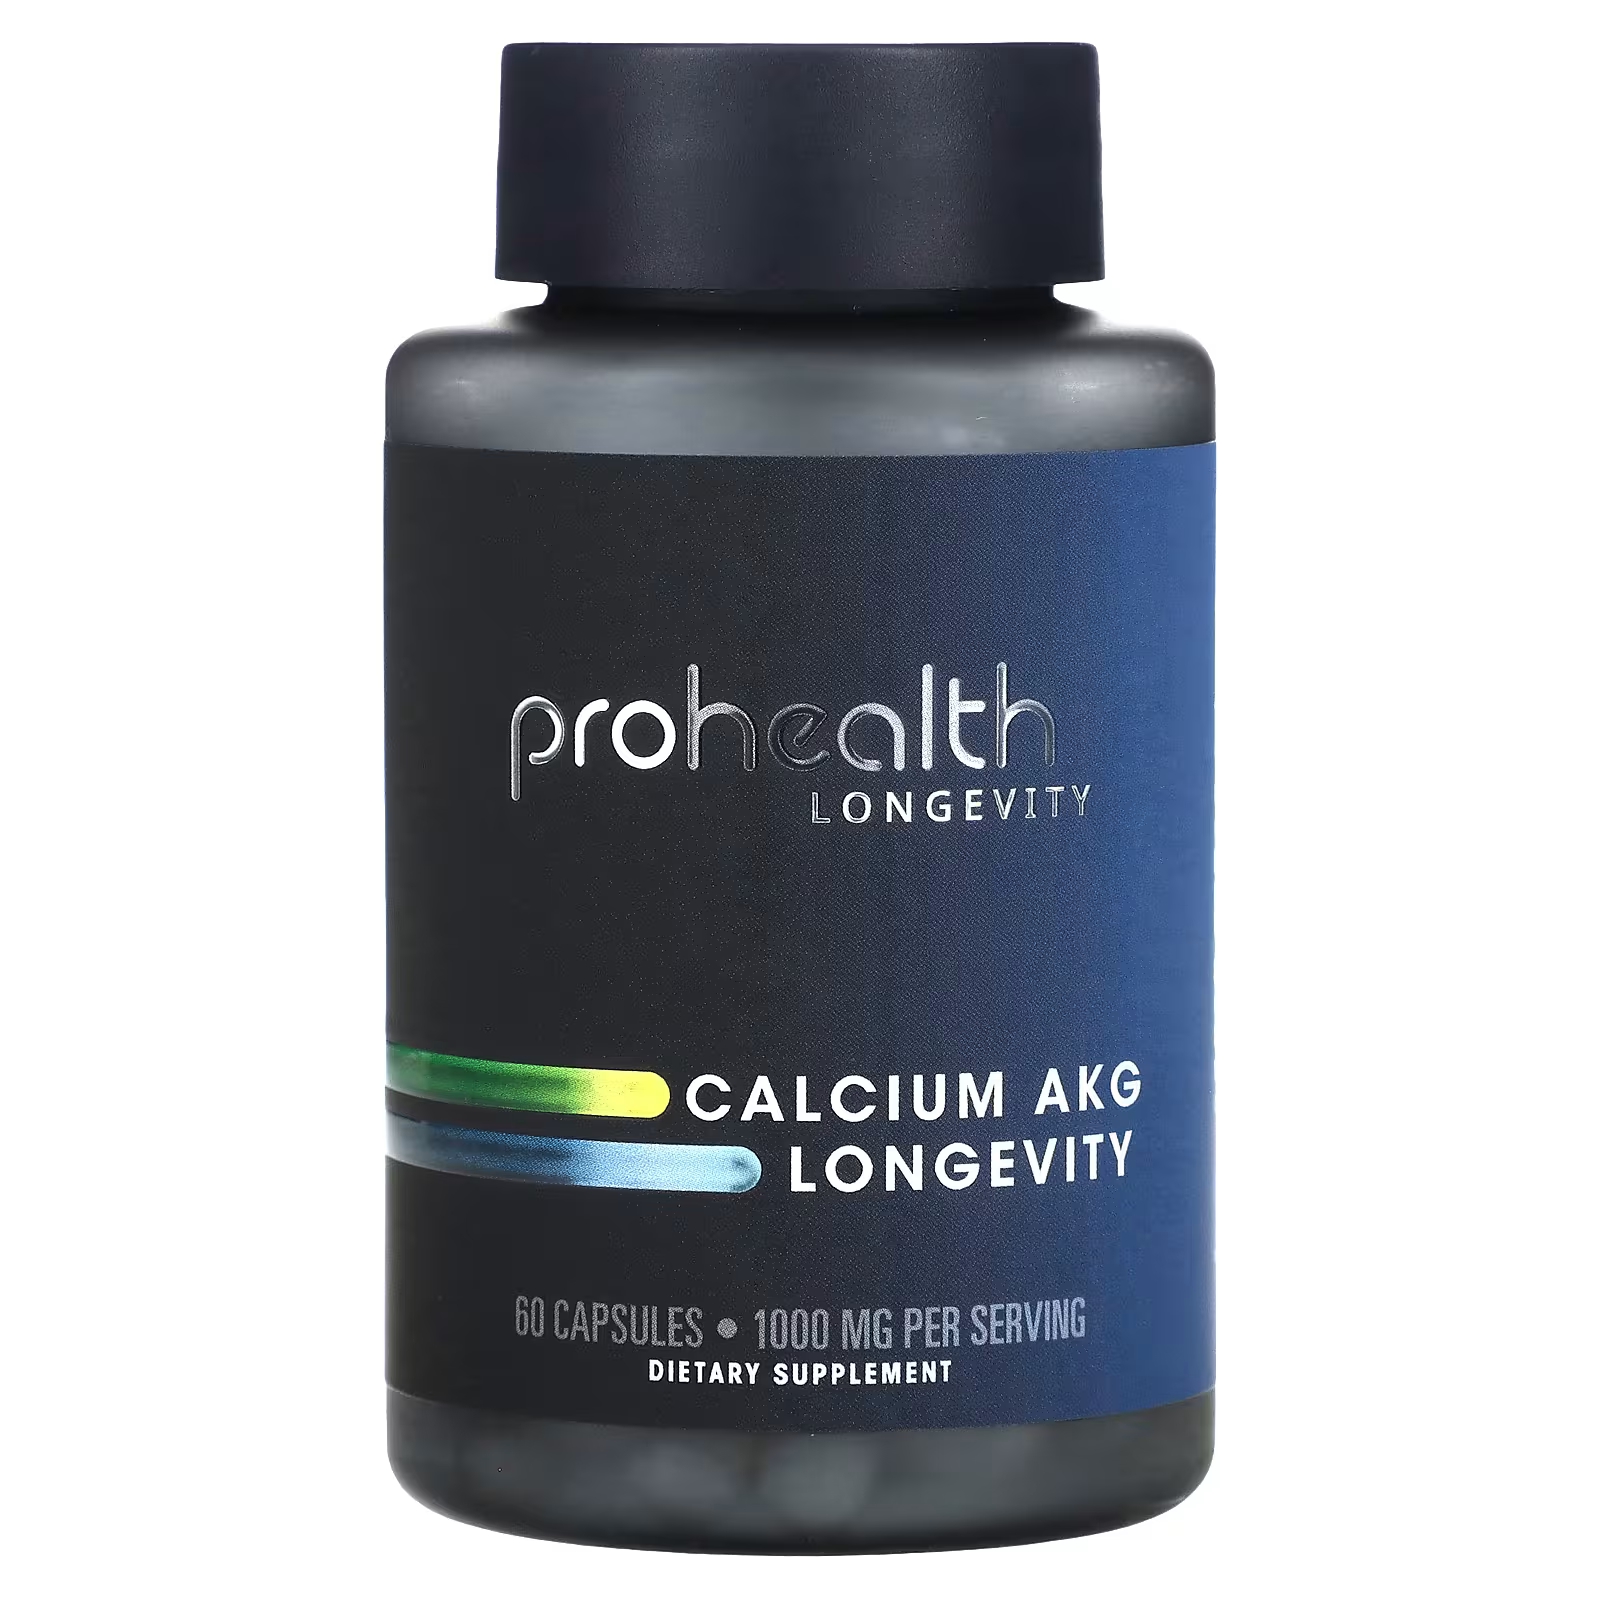 Пищевая добавка ProHealth Longevity Calcium AKG Longevity 1000 мг prohealth longevity energy nadh 12 5 мг 90 таблеток